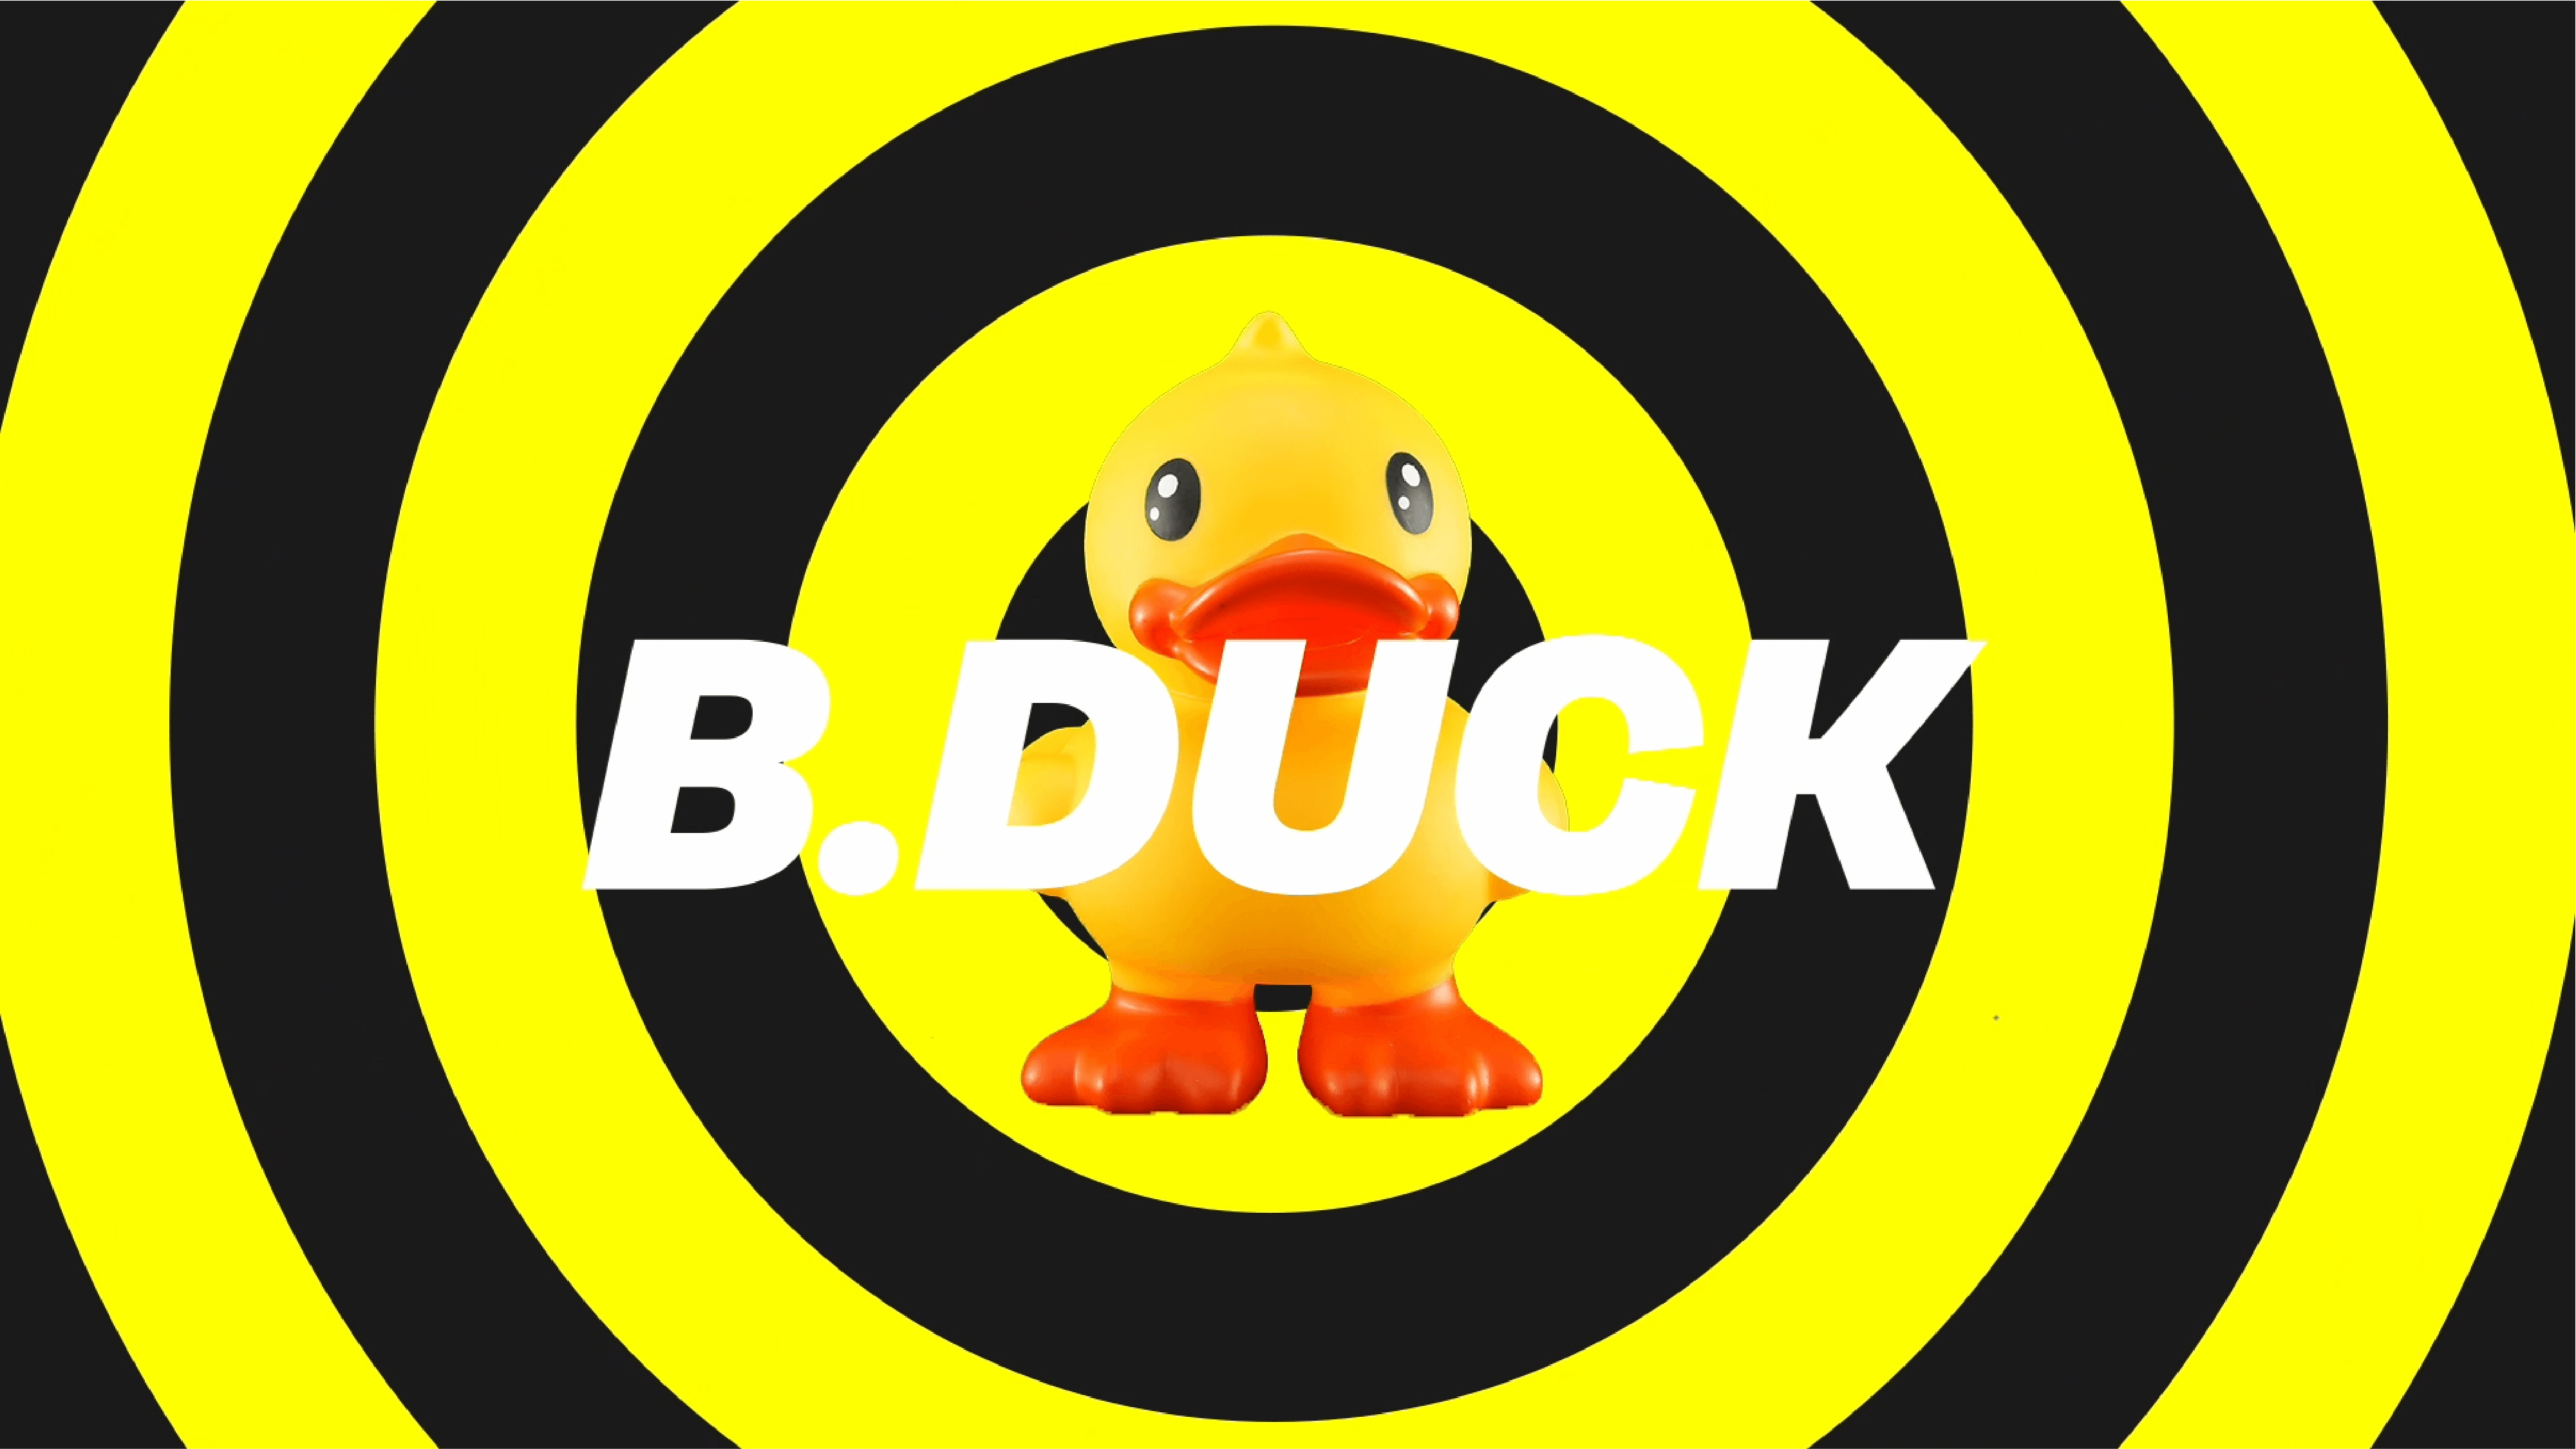 B duck壁纸图片